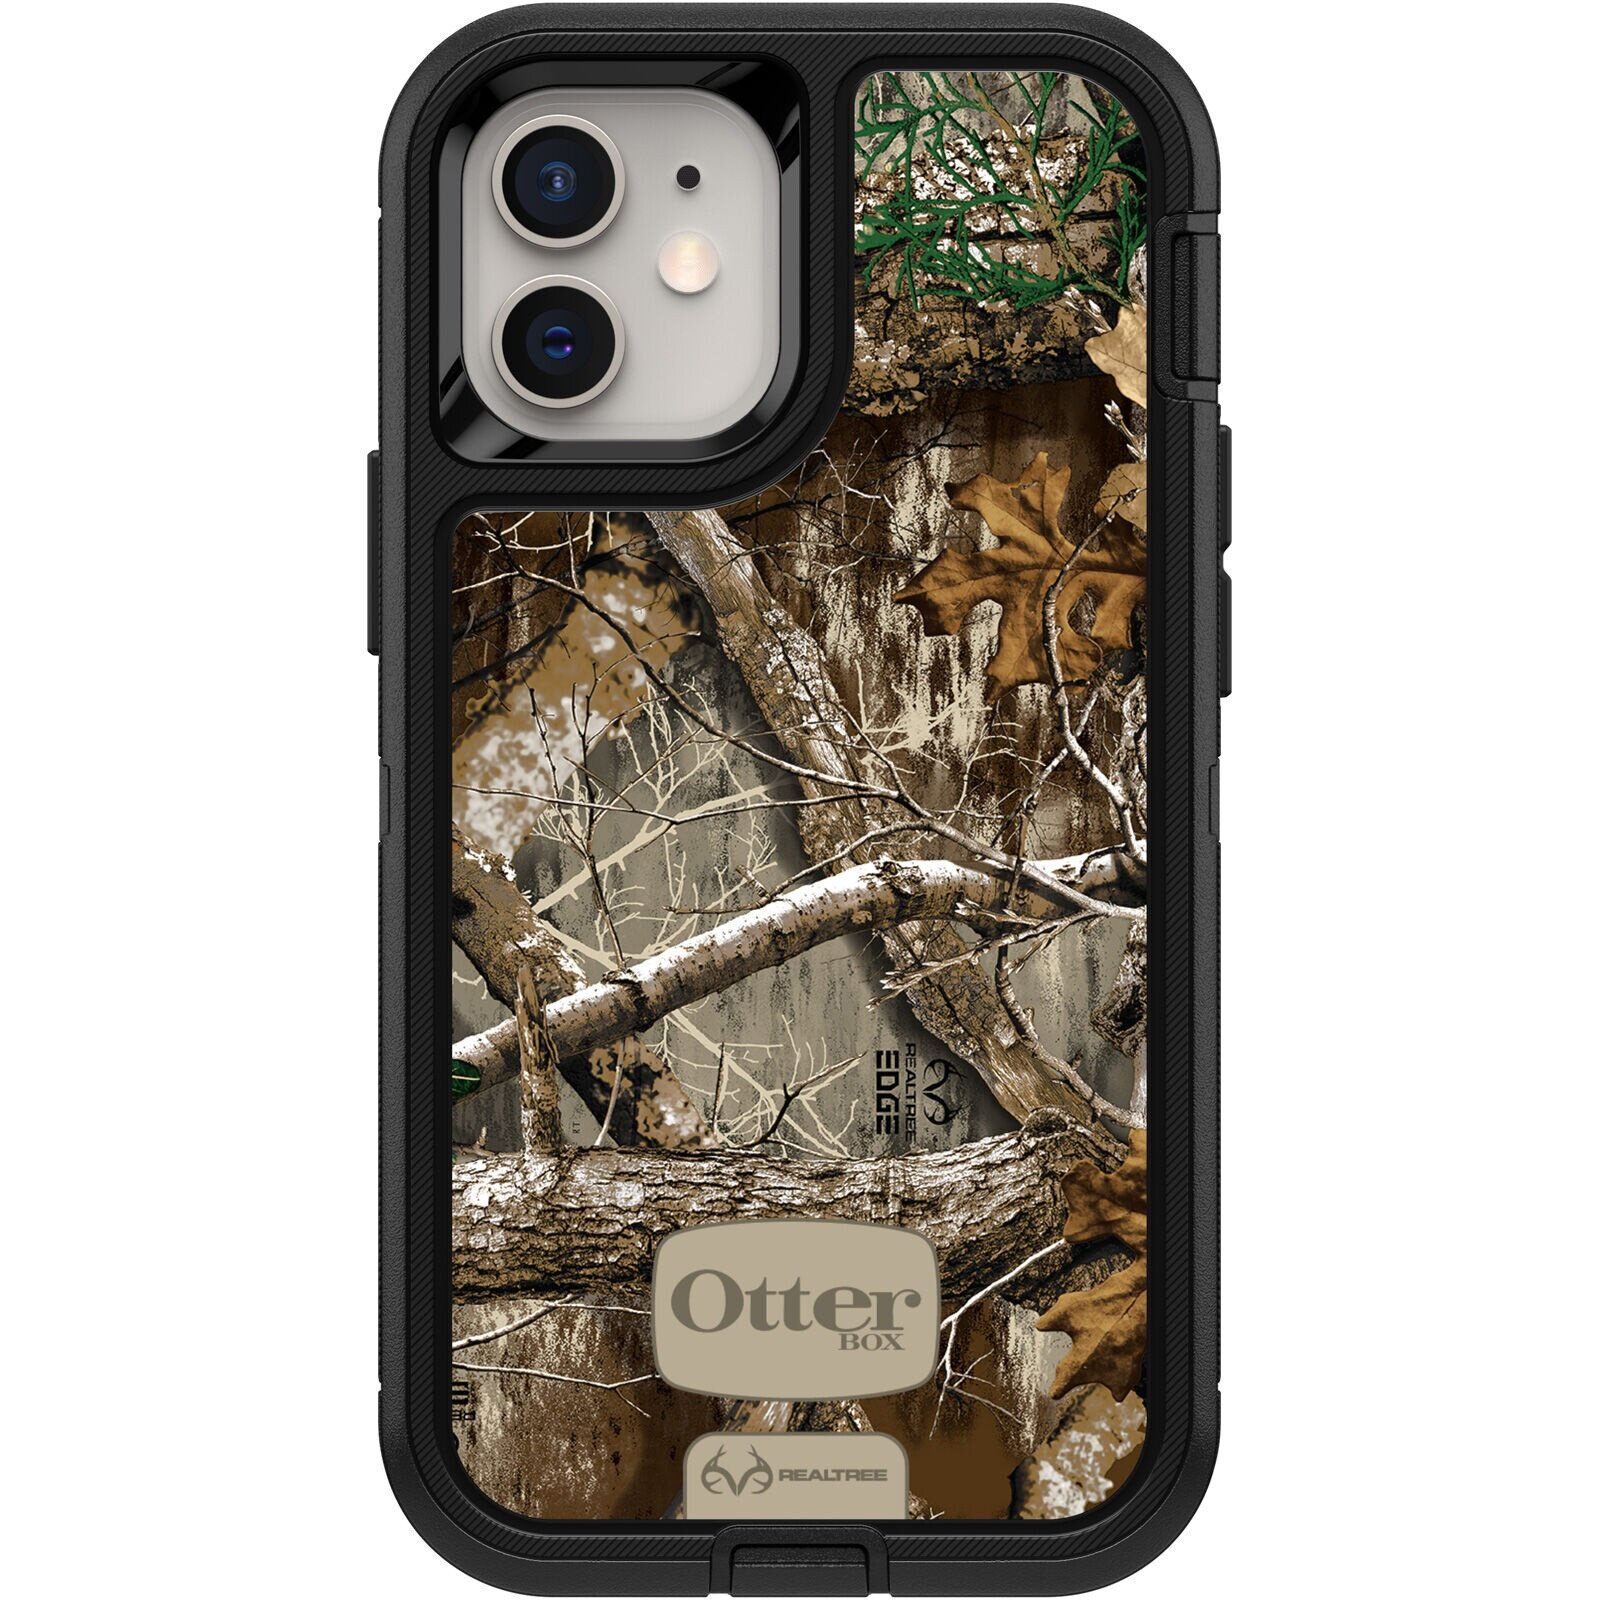 Buy OtterBox iPhone 12 mini Case Defender Series - RealTree Edge Black  (Camo Graphic) online Worldwide 